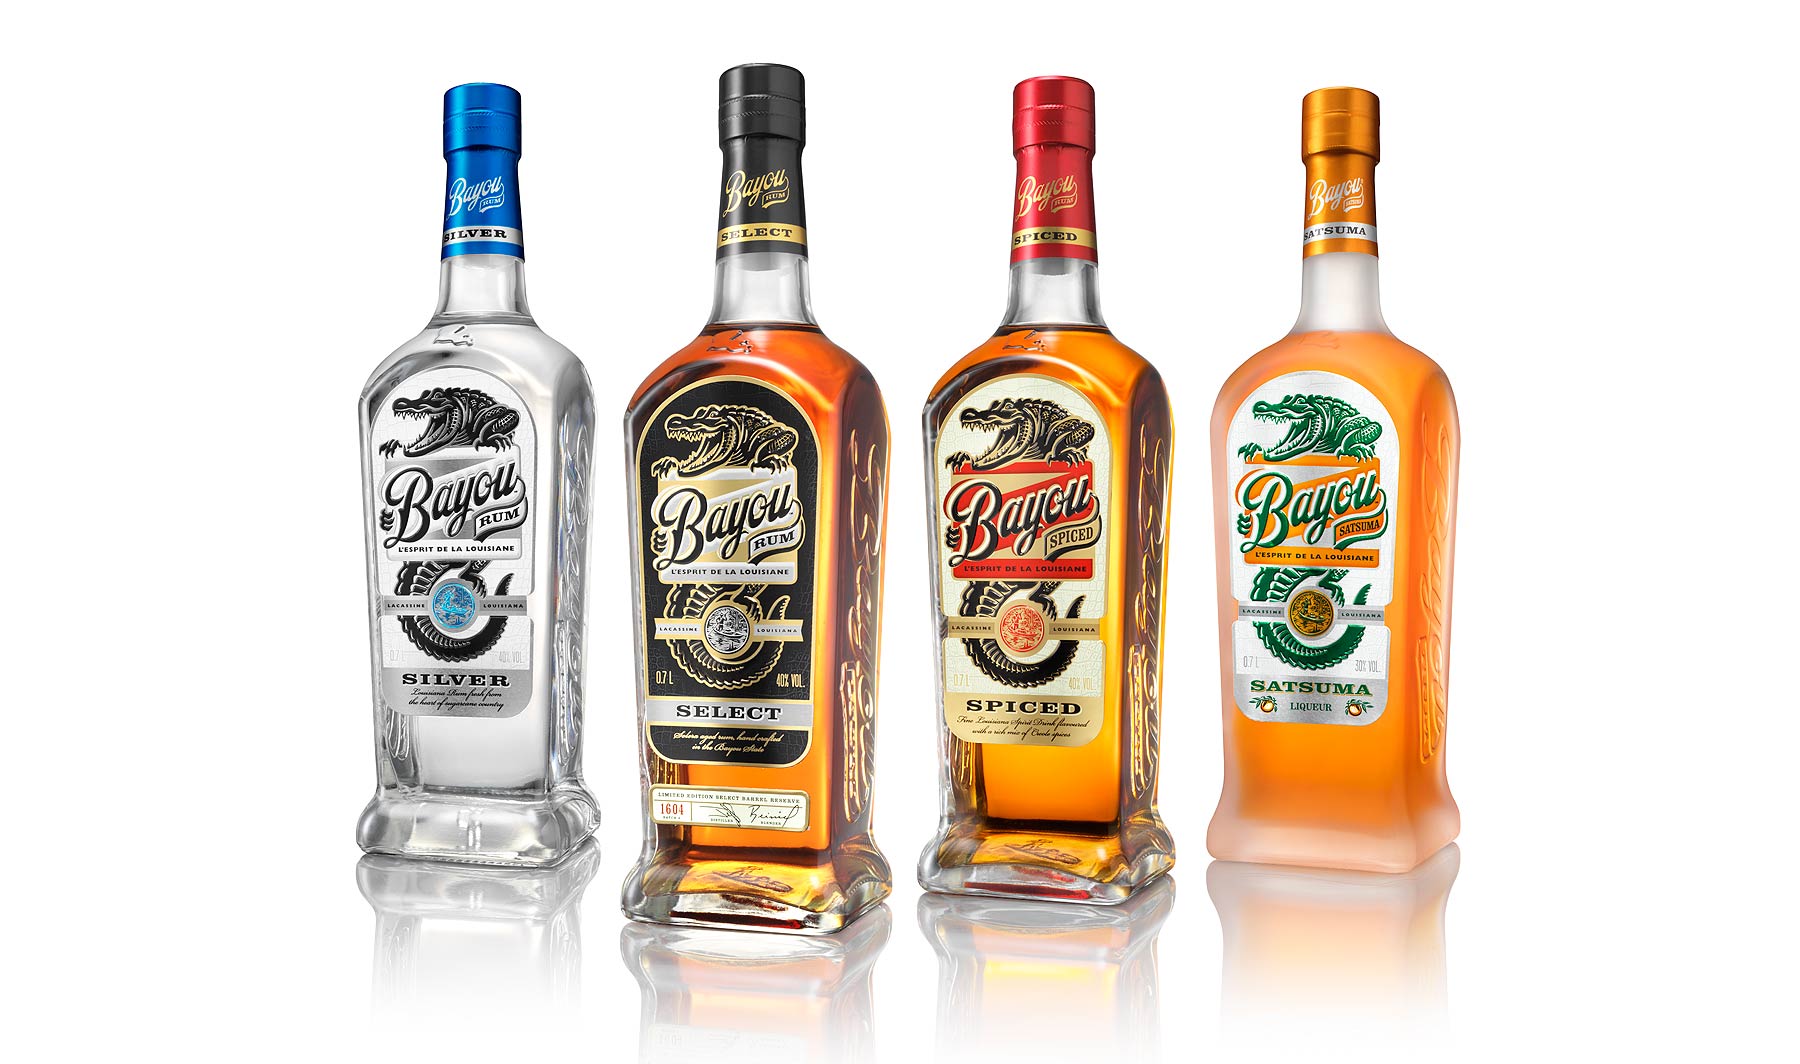 Bayou Rum bottle group